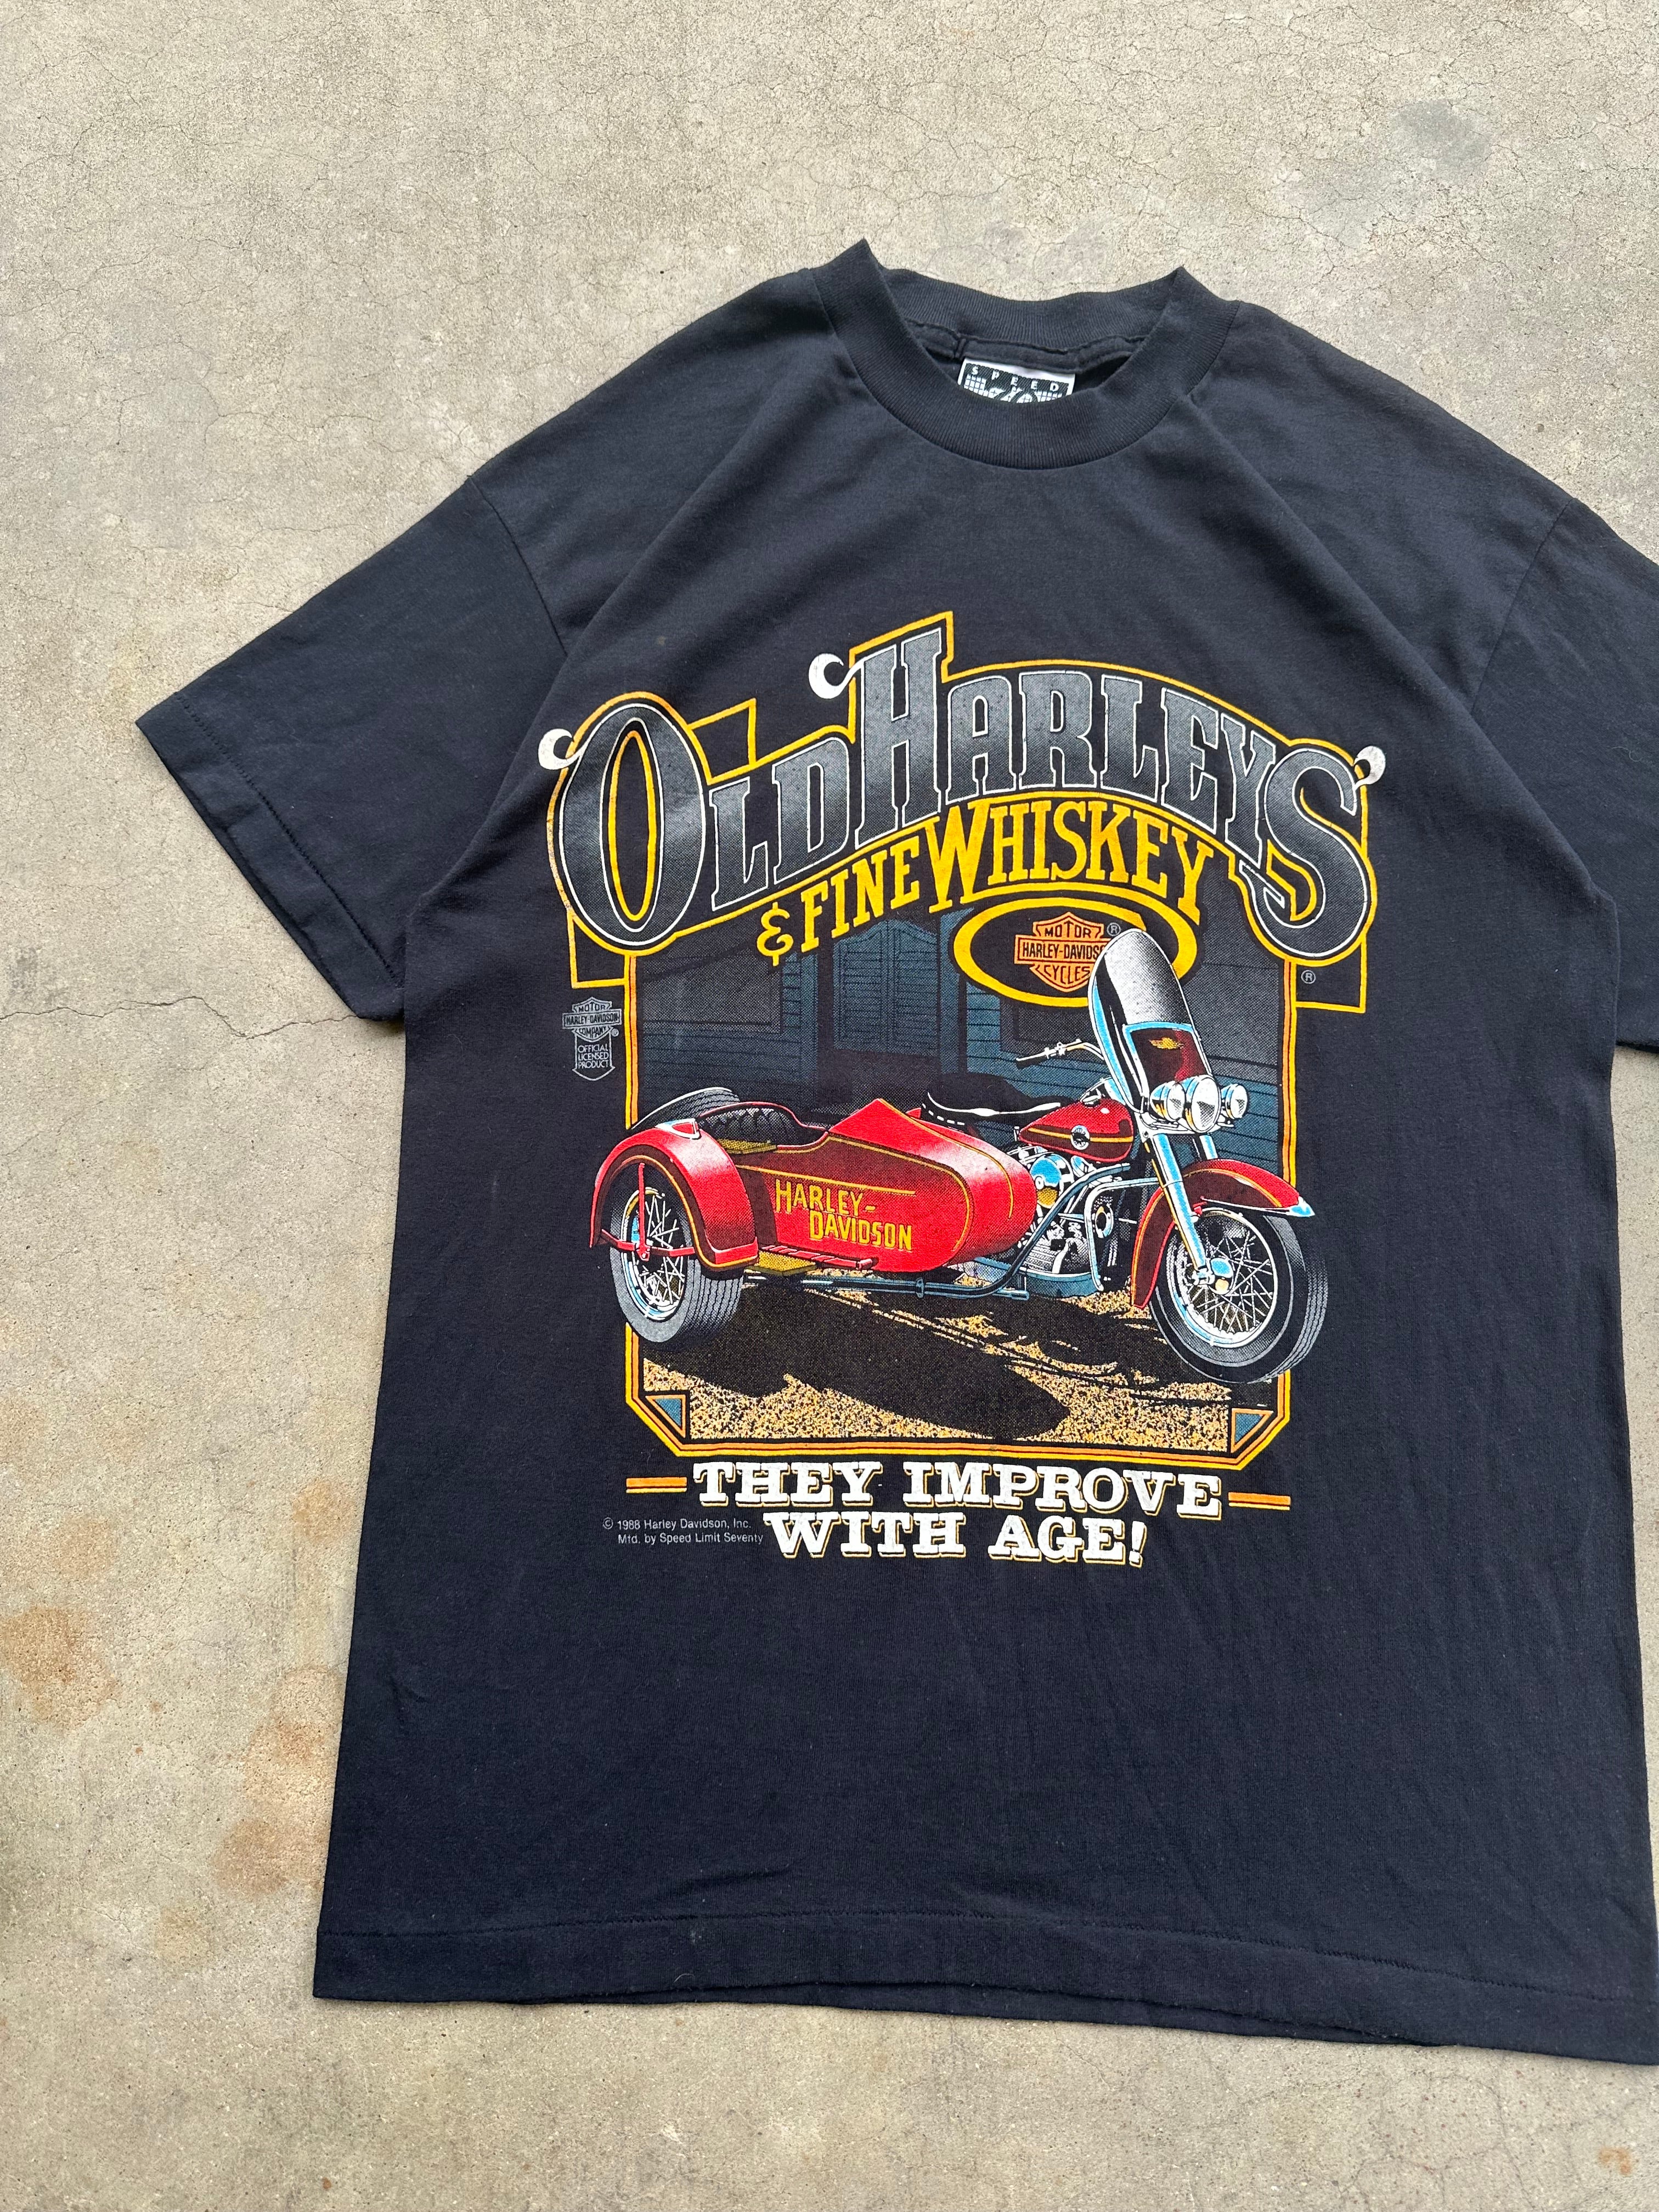 1988 Harley Davidson Old Harley’s & Fine Whiskey T-Shirt (M)